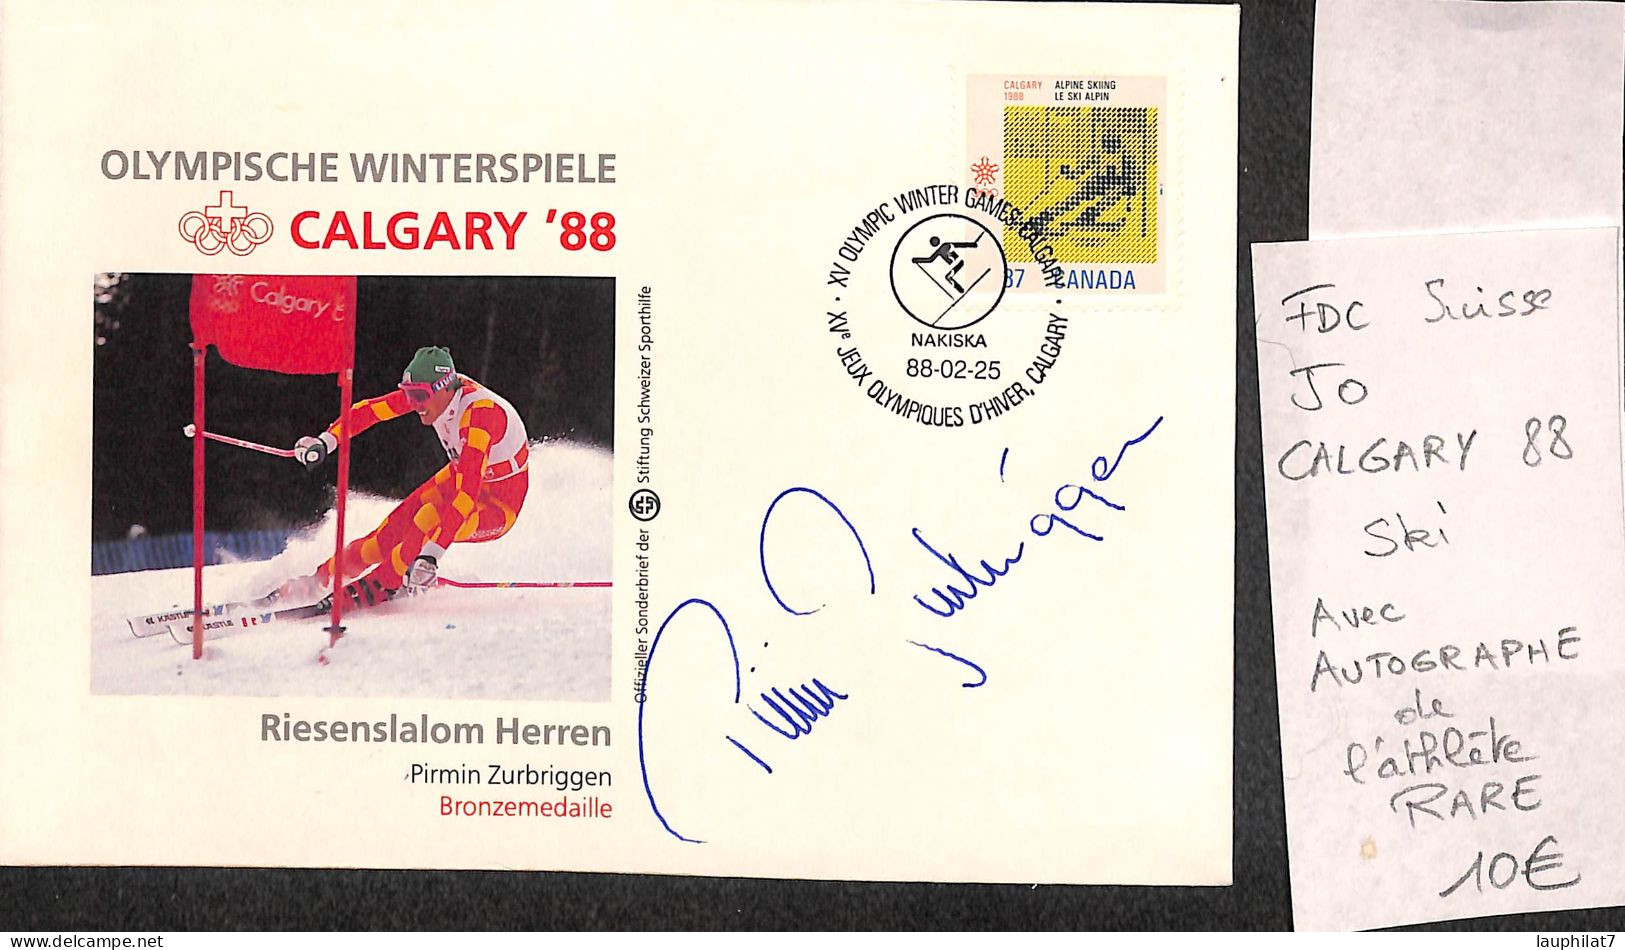 [900095]TB//-Suisse 1988 - FDC, Documents, Pirmin Zurbriggen, Calgary, Avec Autographe De L'athlète, RARE, Jeux Olympiq - Inverno1988: Calgary